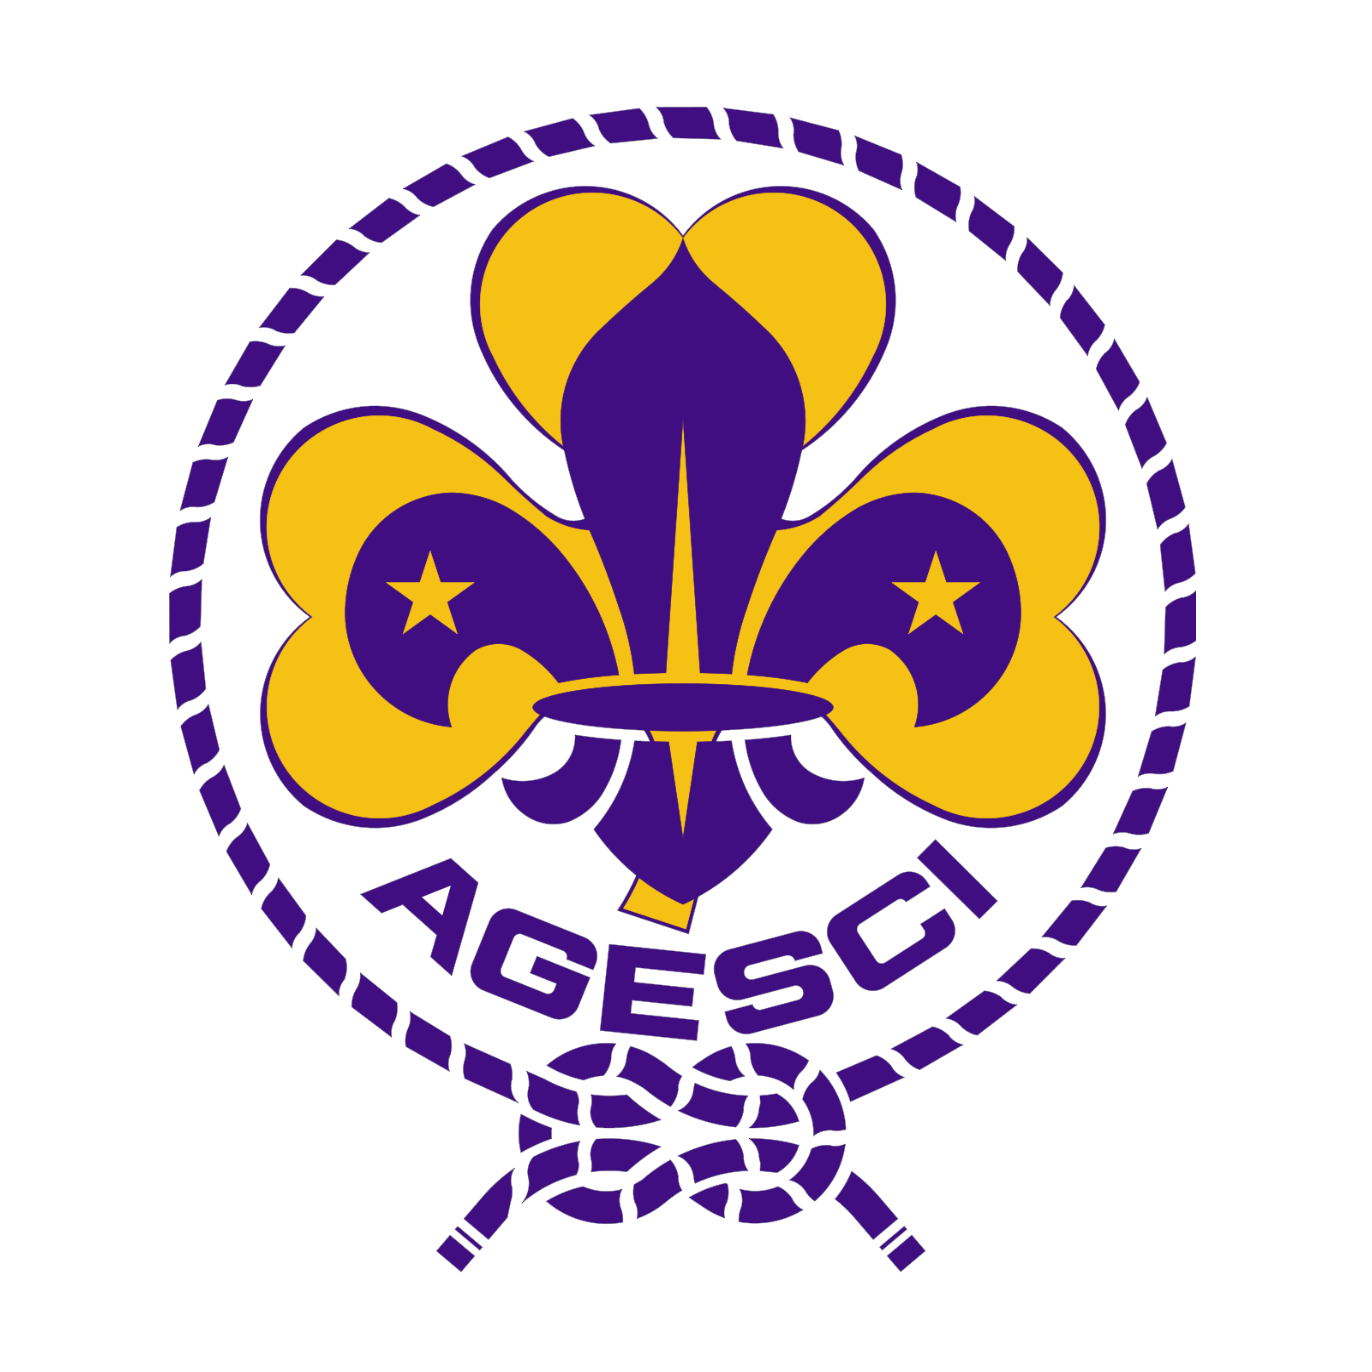 Agesci logo